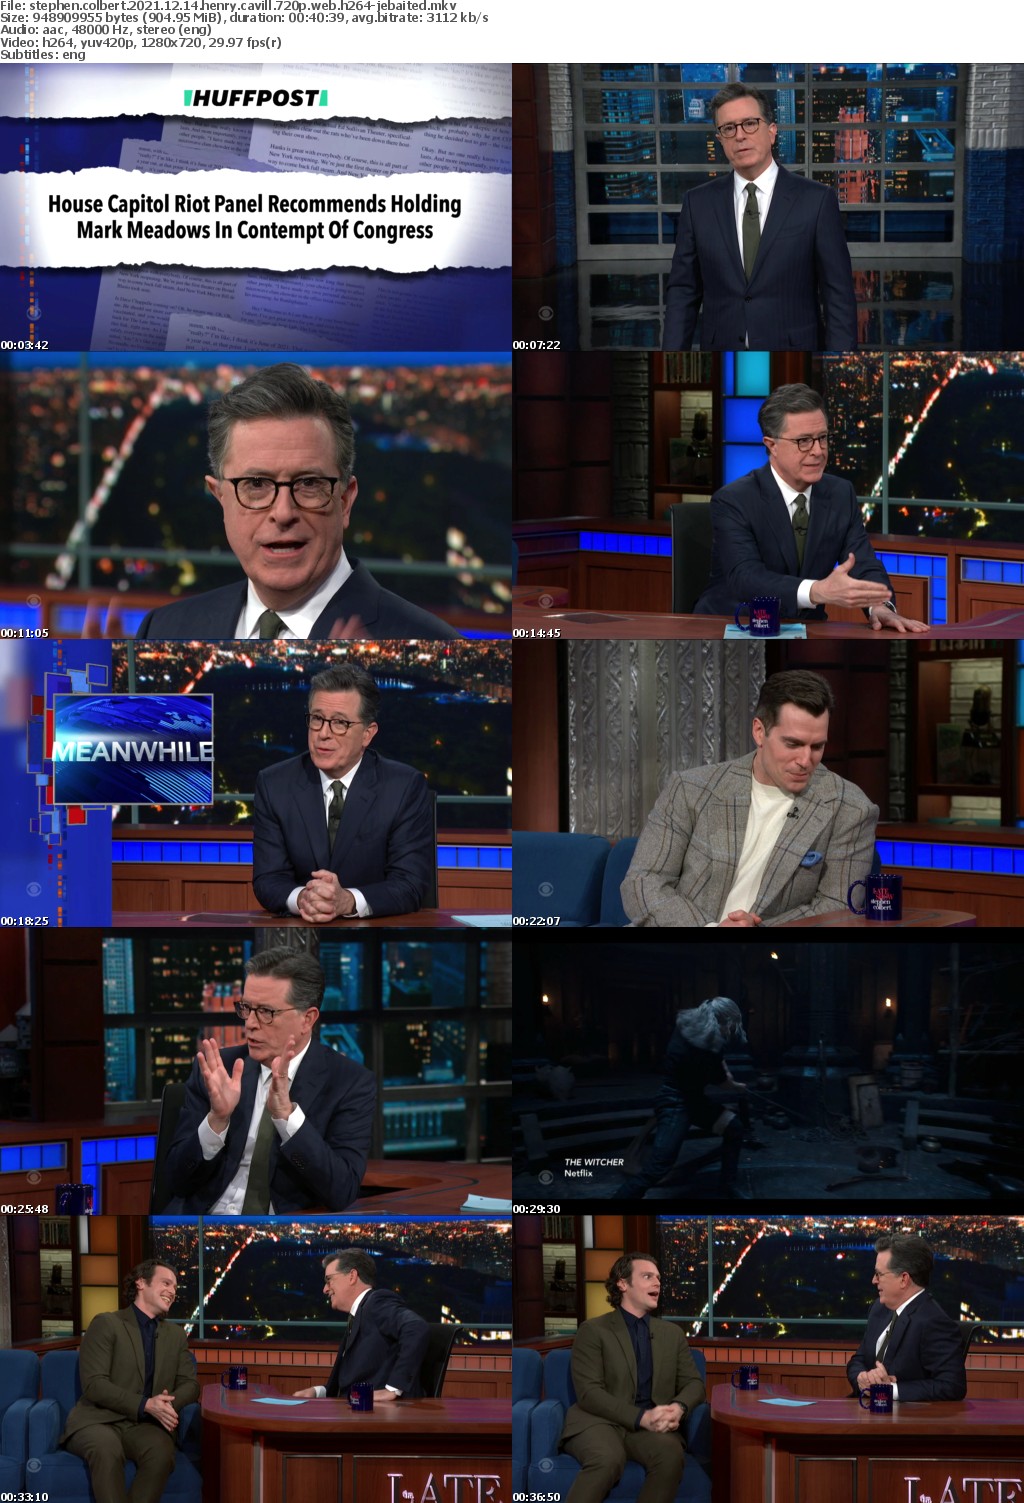 Stephen Colbert 2021 12 14 Henry Cavill 720p WEB H264-JEBAITED